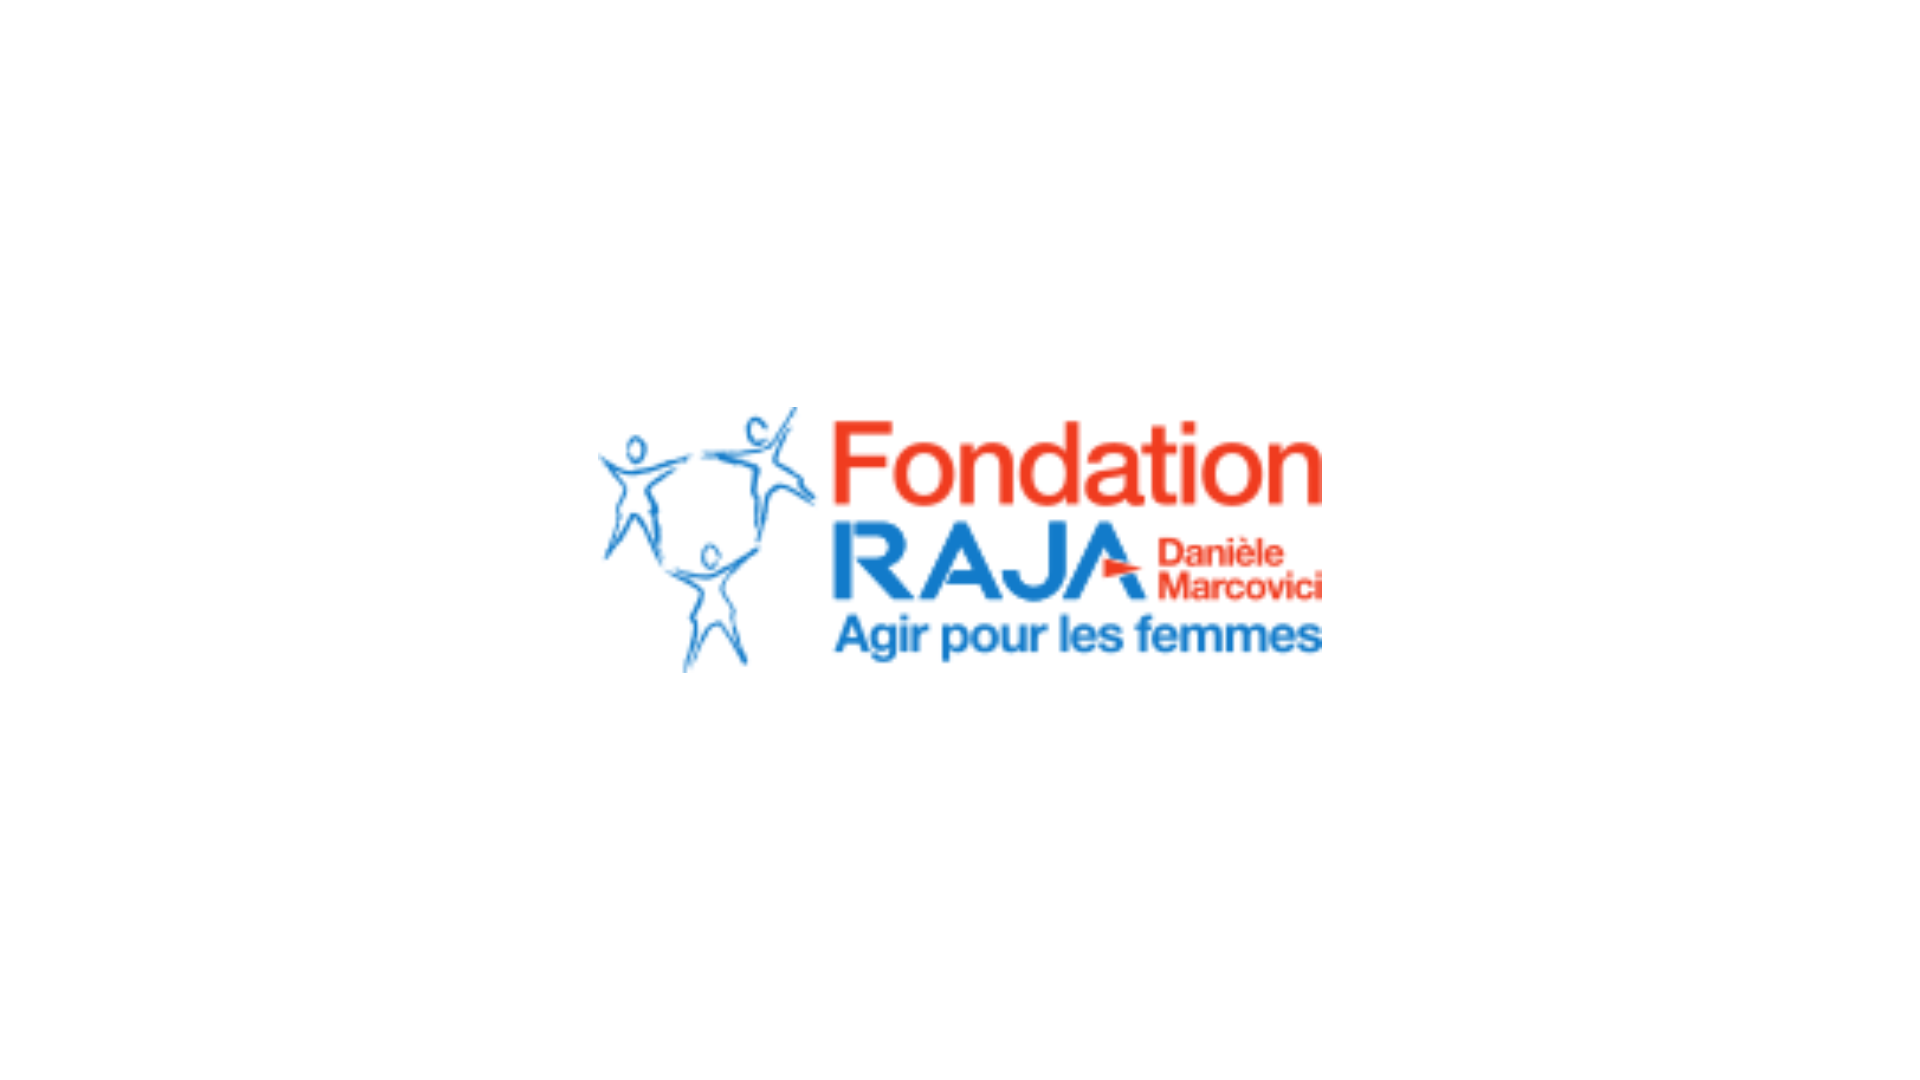 RAJA-Danièle Marcovici Foundation logo